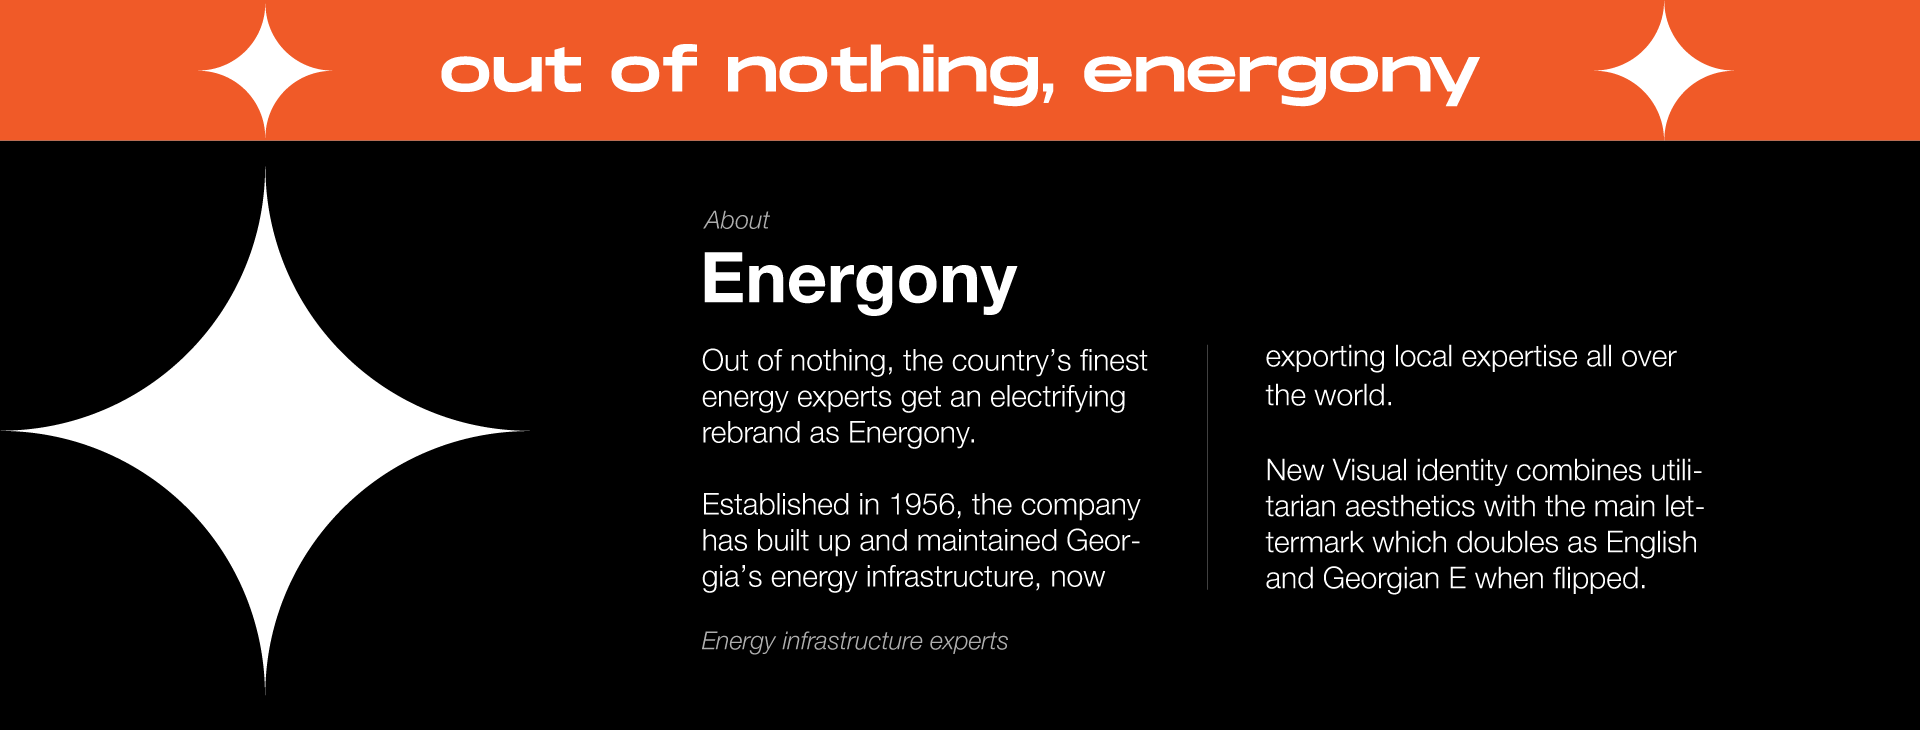 Energony - Energy Infrastructure Experts